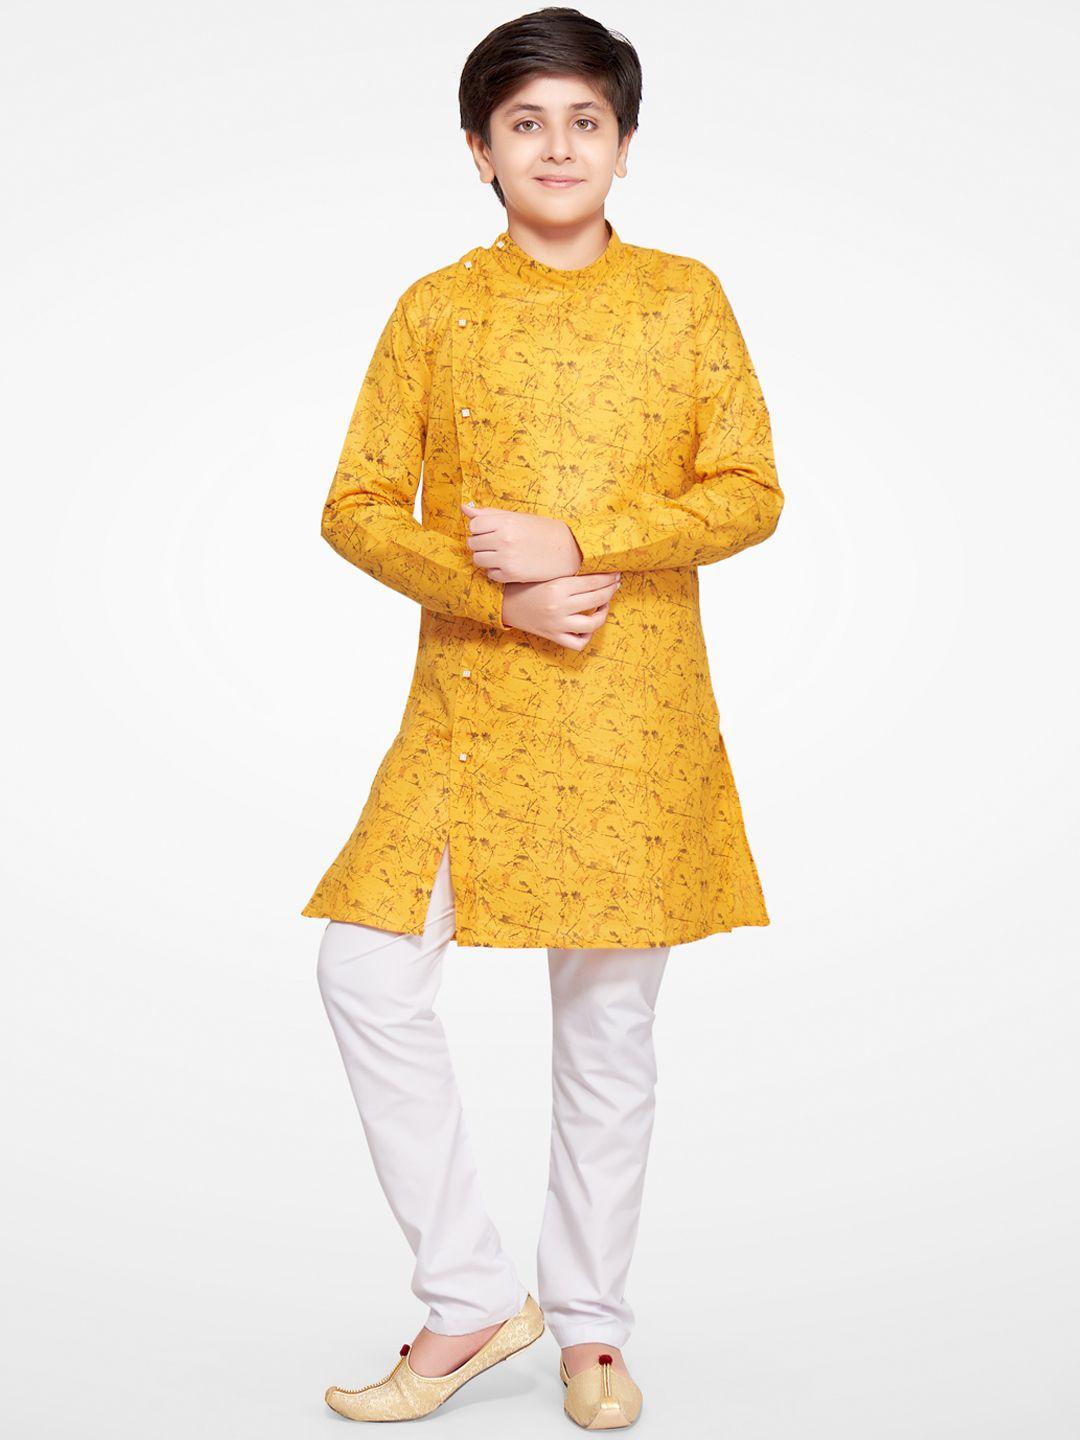 jeetethnics boys yellow floral printed angrakha kurta with pyjamas